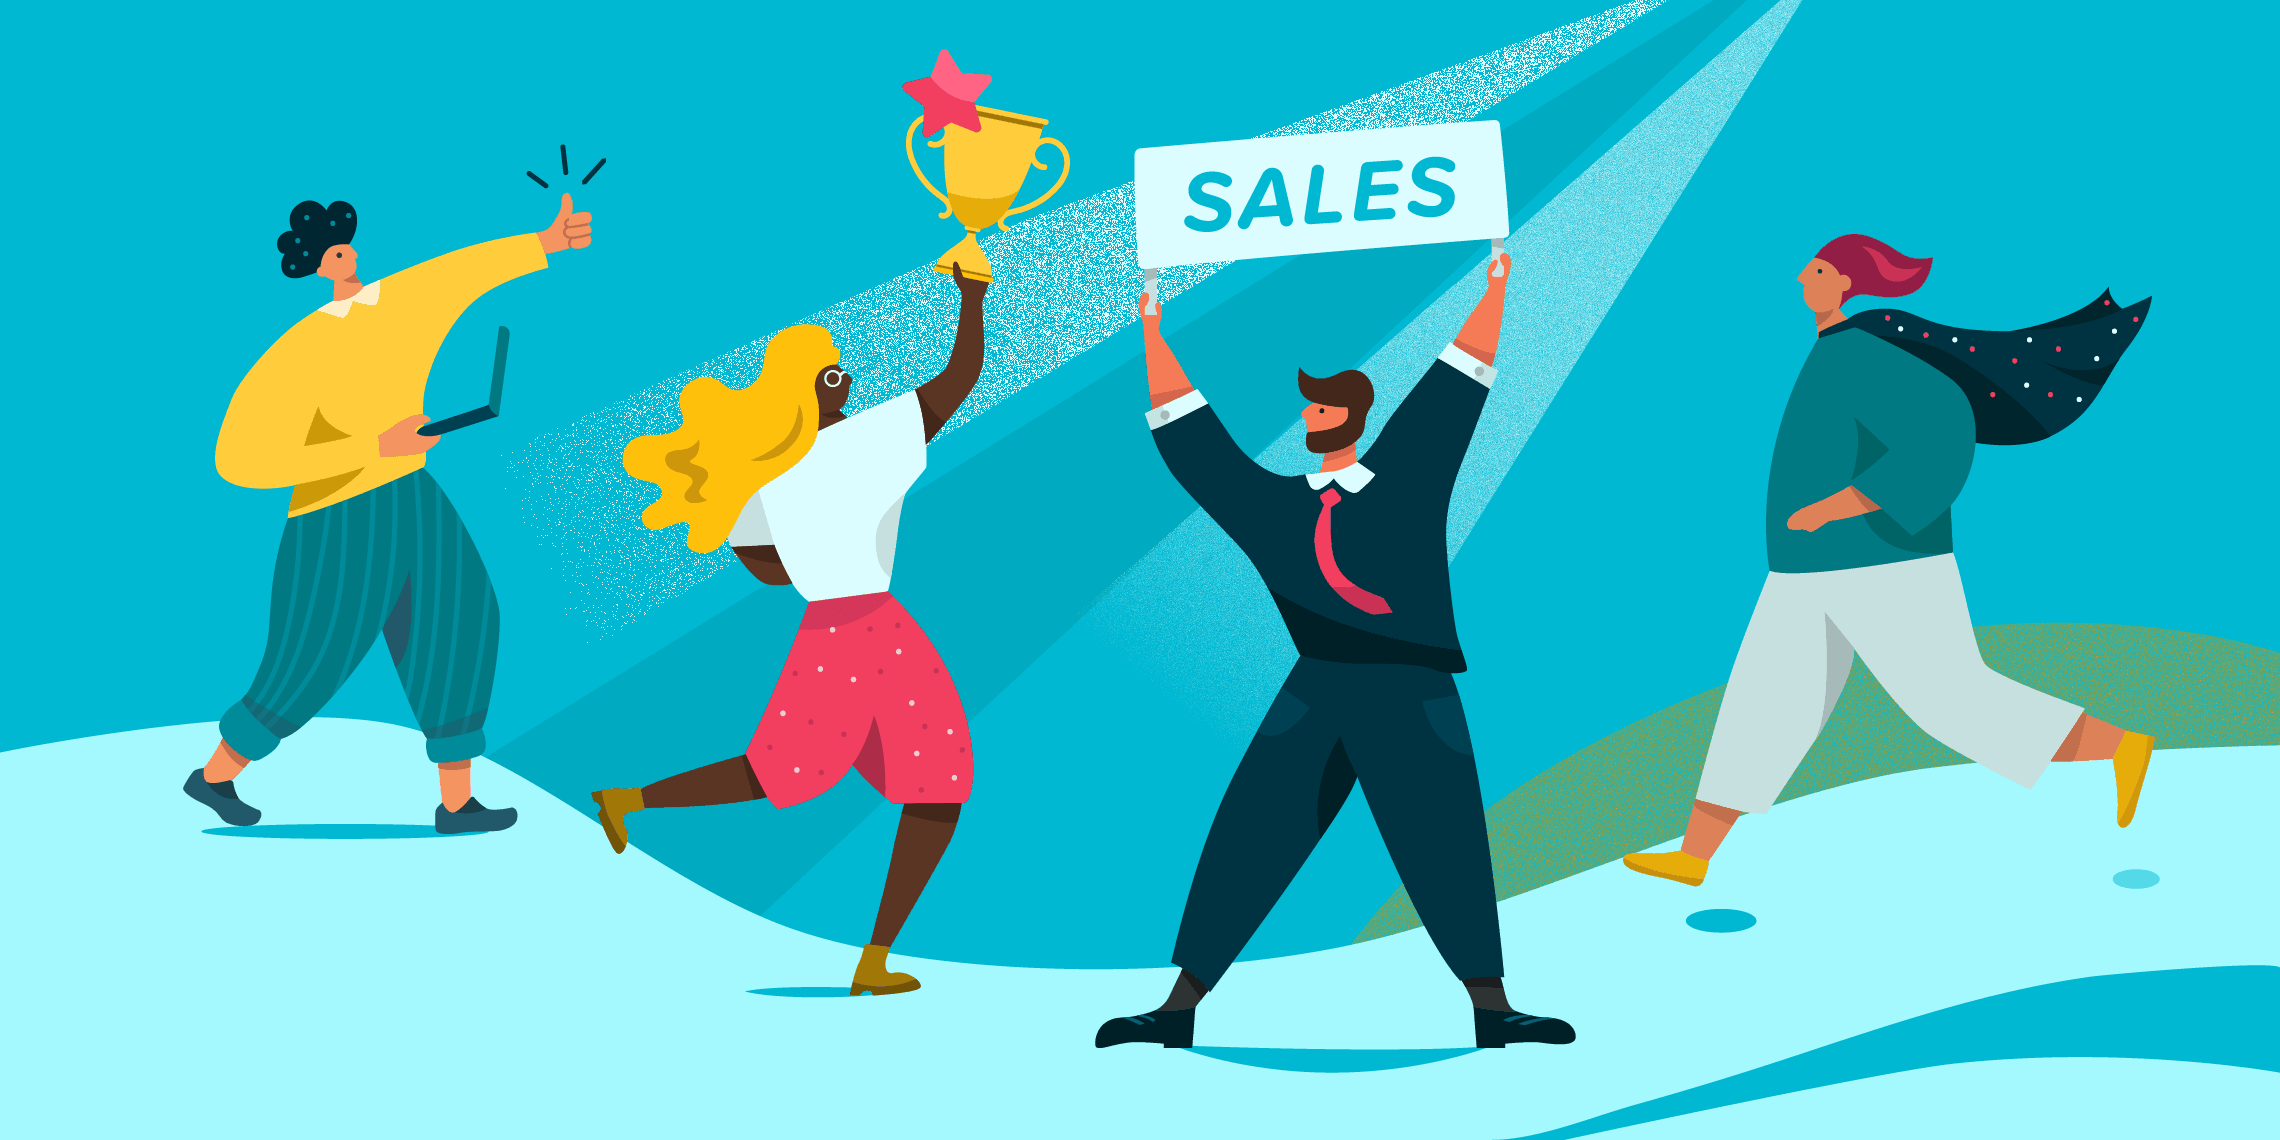 Motivate your sales team